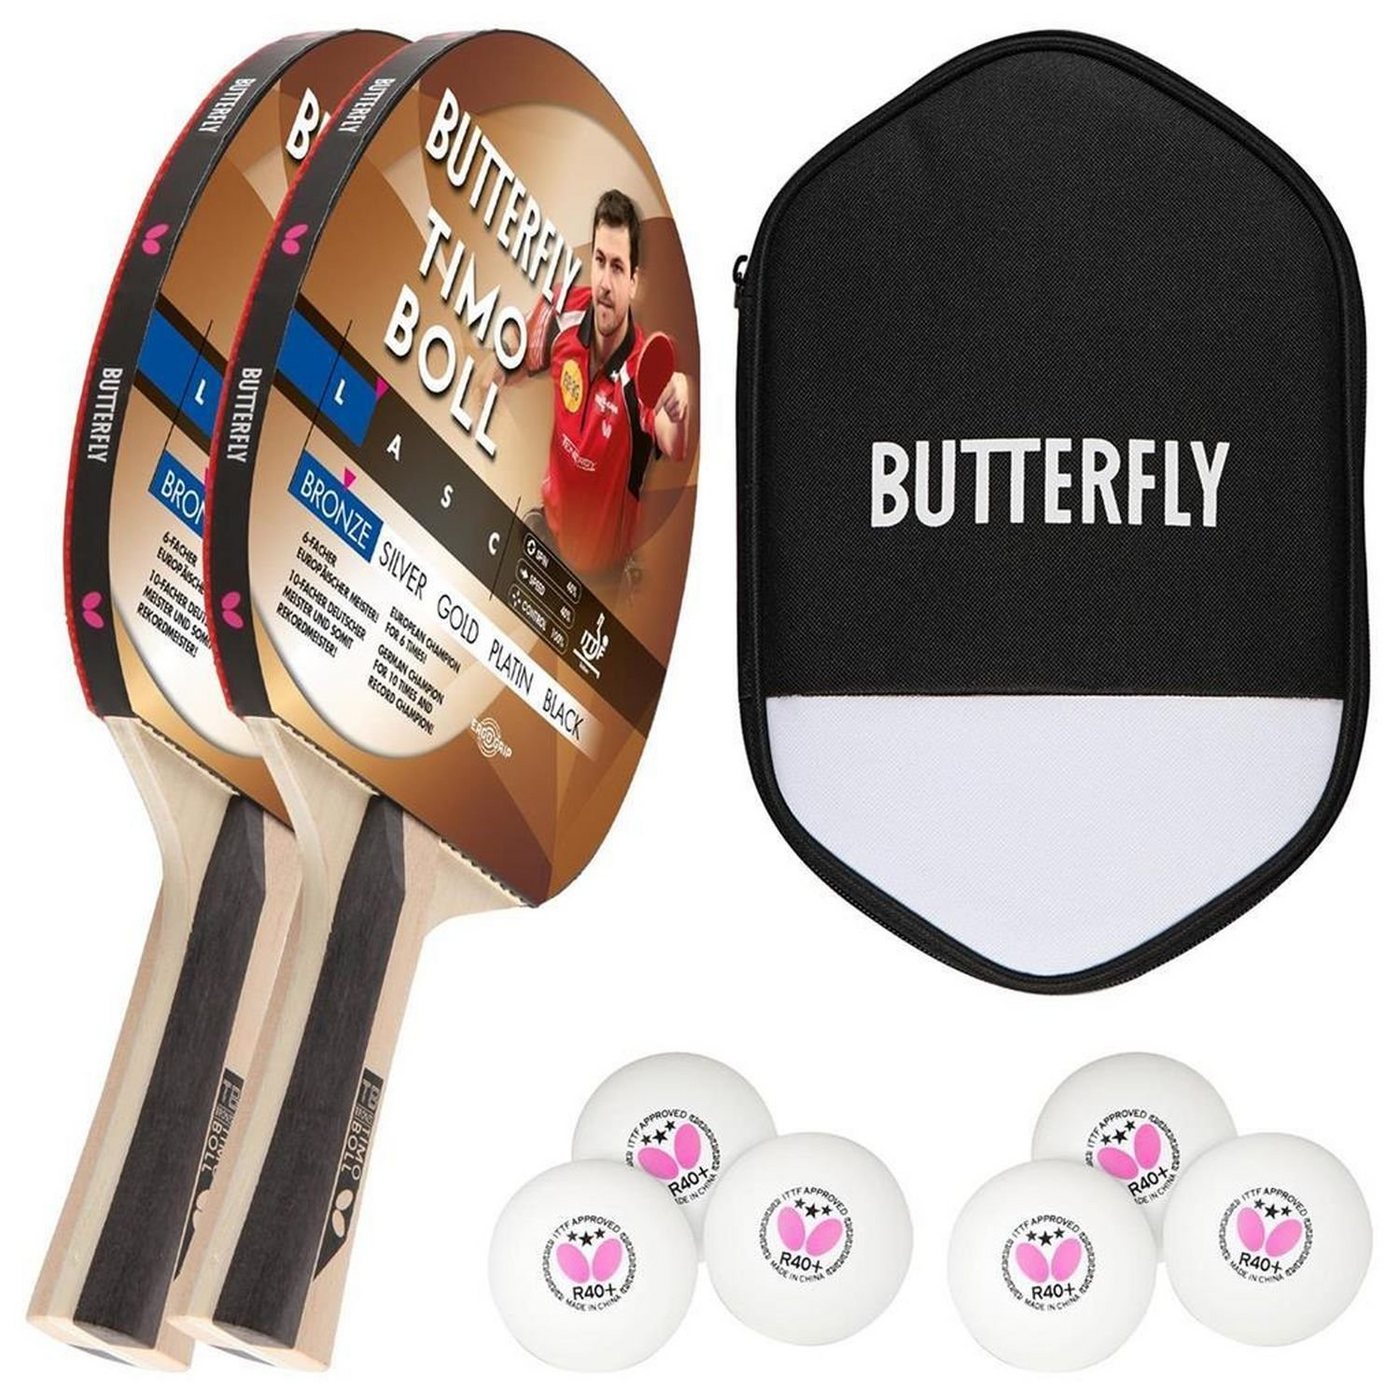 Butterfly Tischtennisschläger 2x Timo Boll Bronze 85011 + Cell Case 2 + Bälle, Tischtennis Schläger Set Tischtennisset Table Tennis Bat Racket von Butterfly